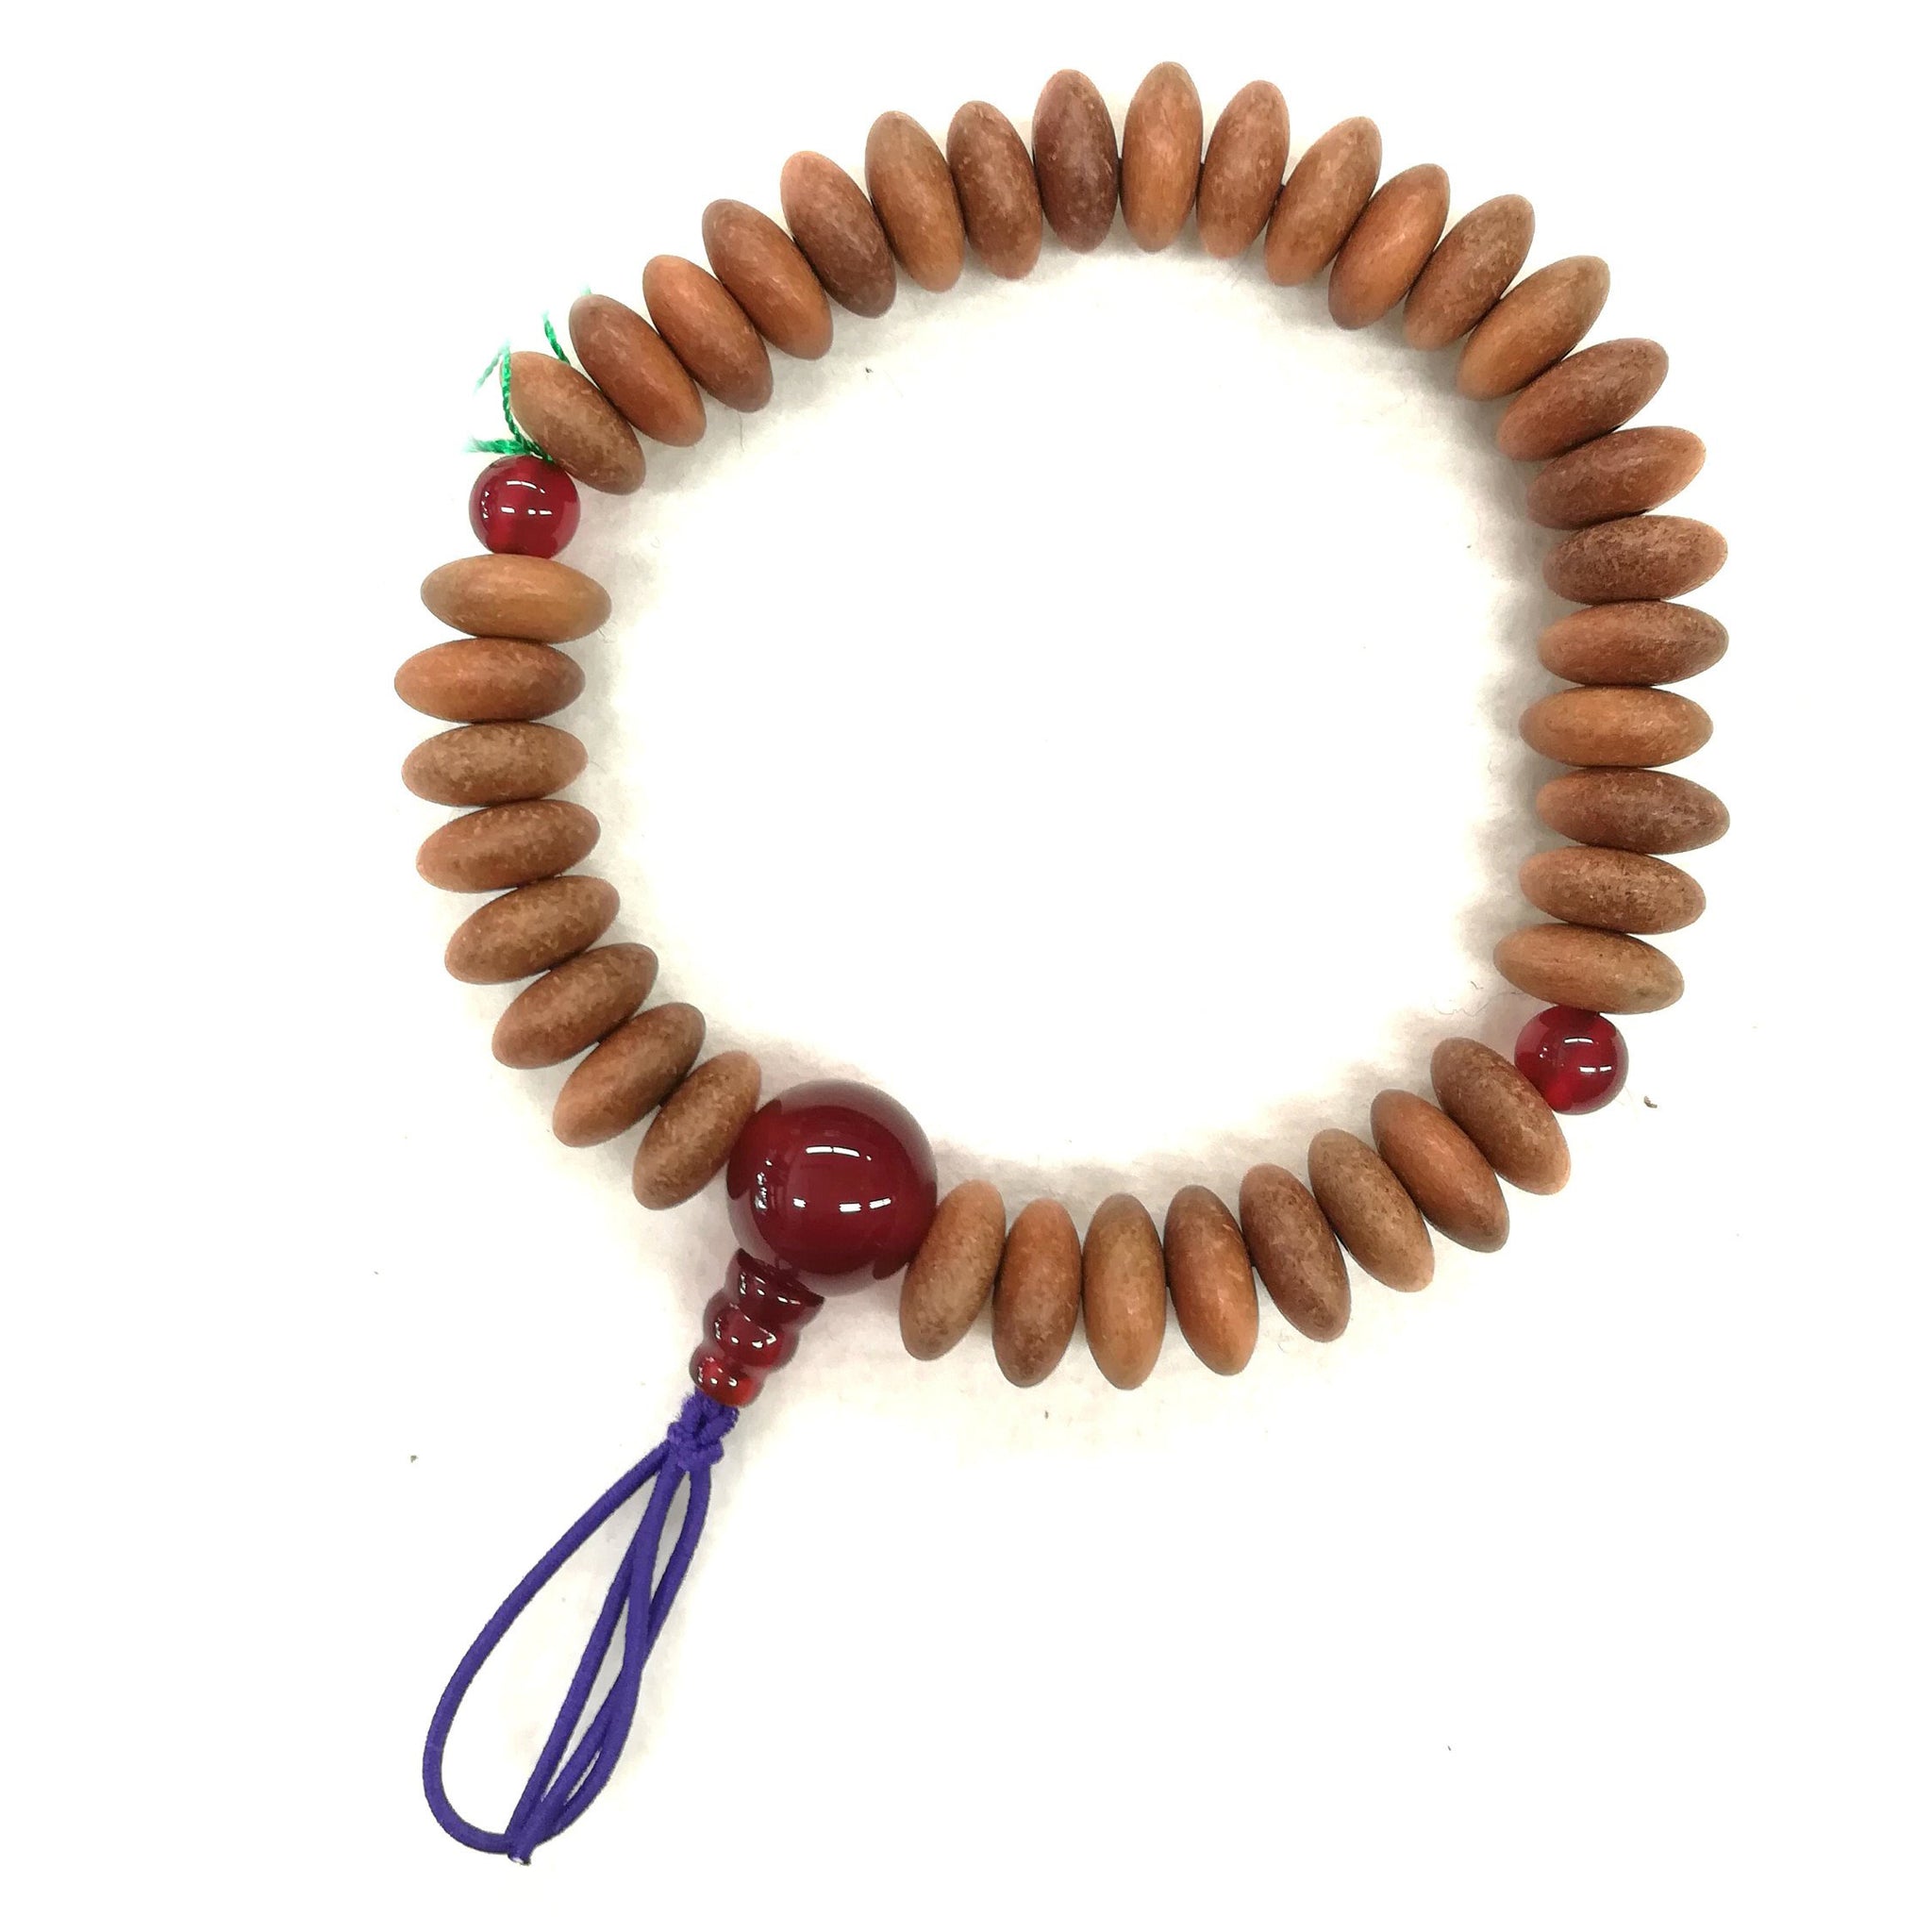 10mm Indian sandalwood Flat Beads & Red Agate Bracelet